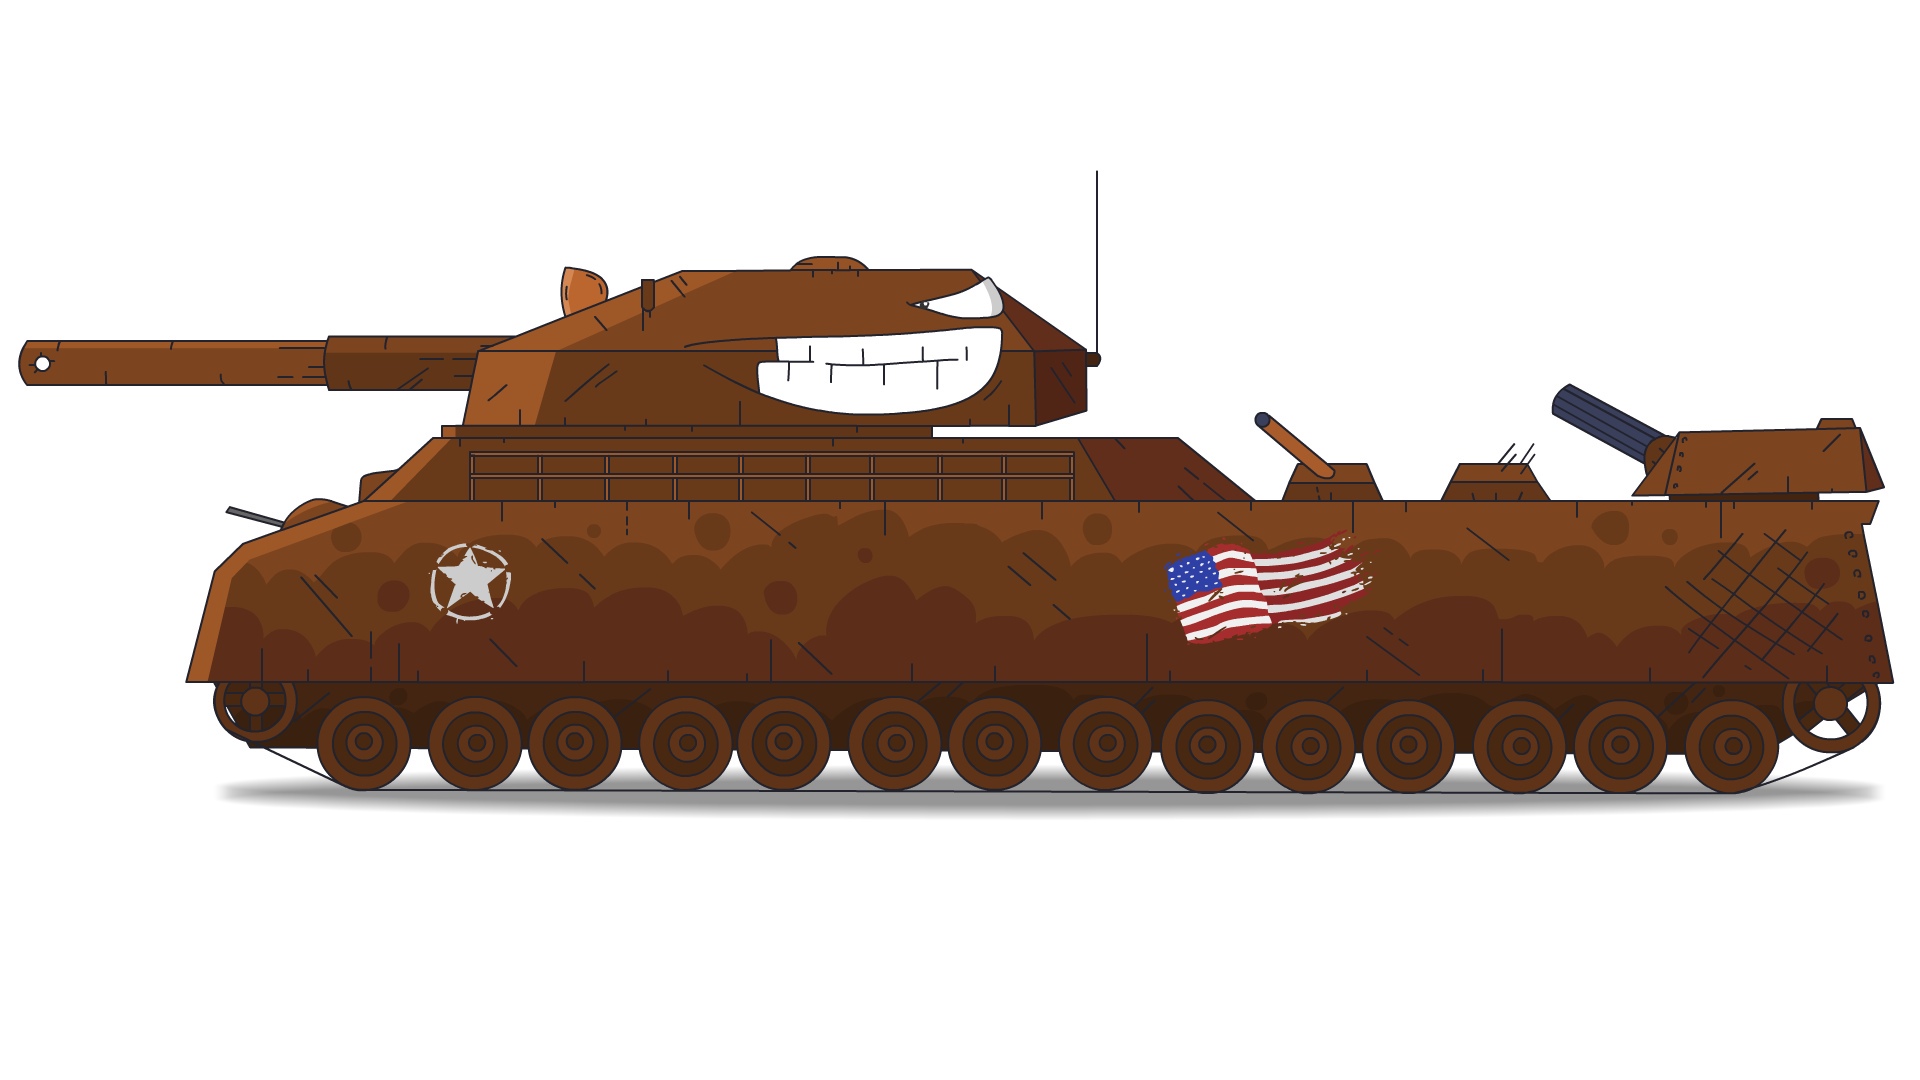 Ратте танк геранд. Королевский РАТТЕ танк Геранд. Танк кв 44 РАТТЕ. РАТТЕ американский танк Геранд. Стальные монстры танки РАТТЕ.